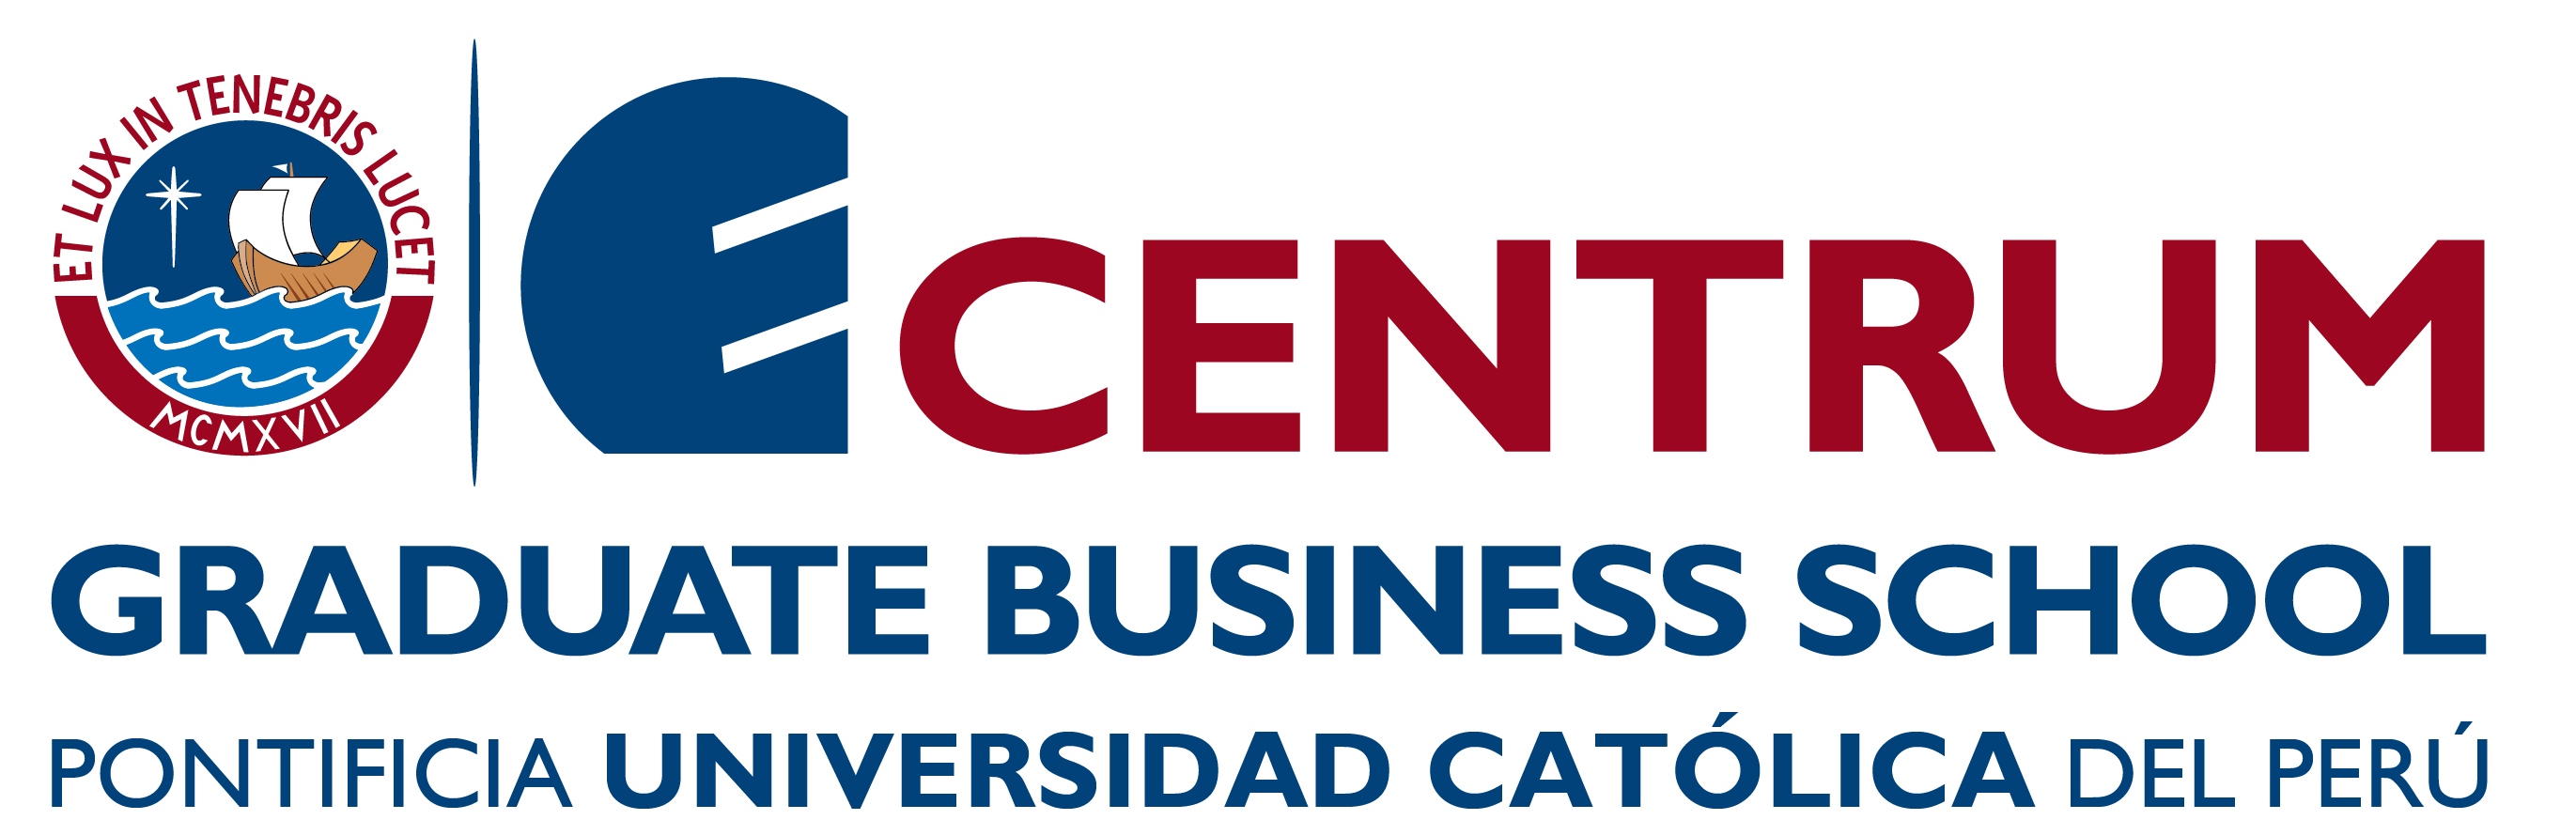 Logo CENTRUM PUCP Business School – Pontificia Universidad Católica del Perú